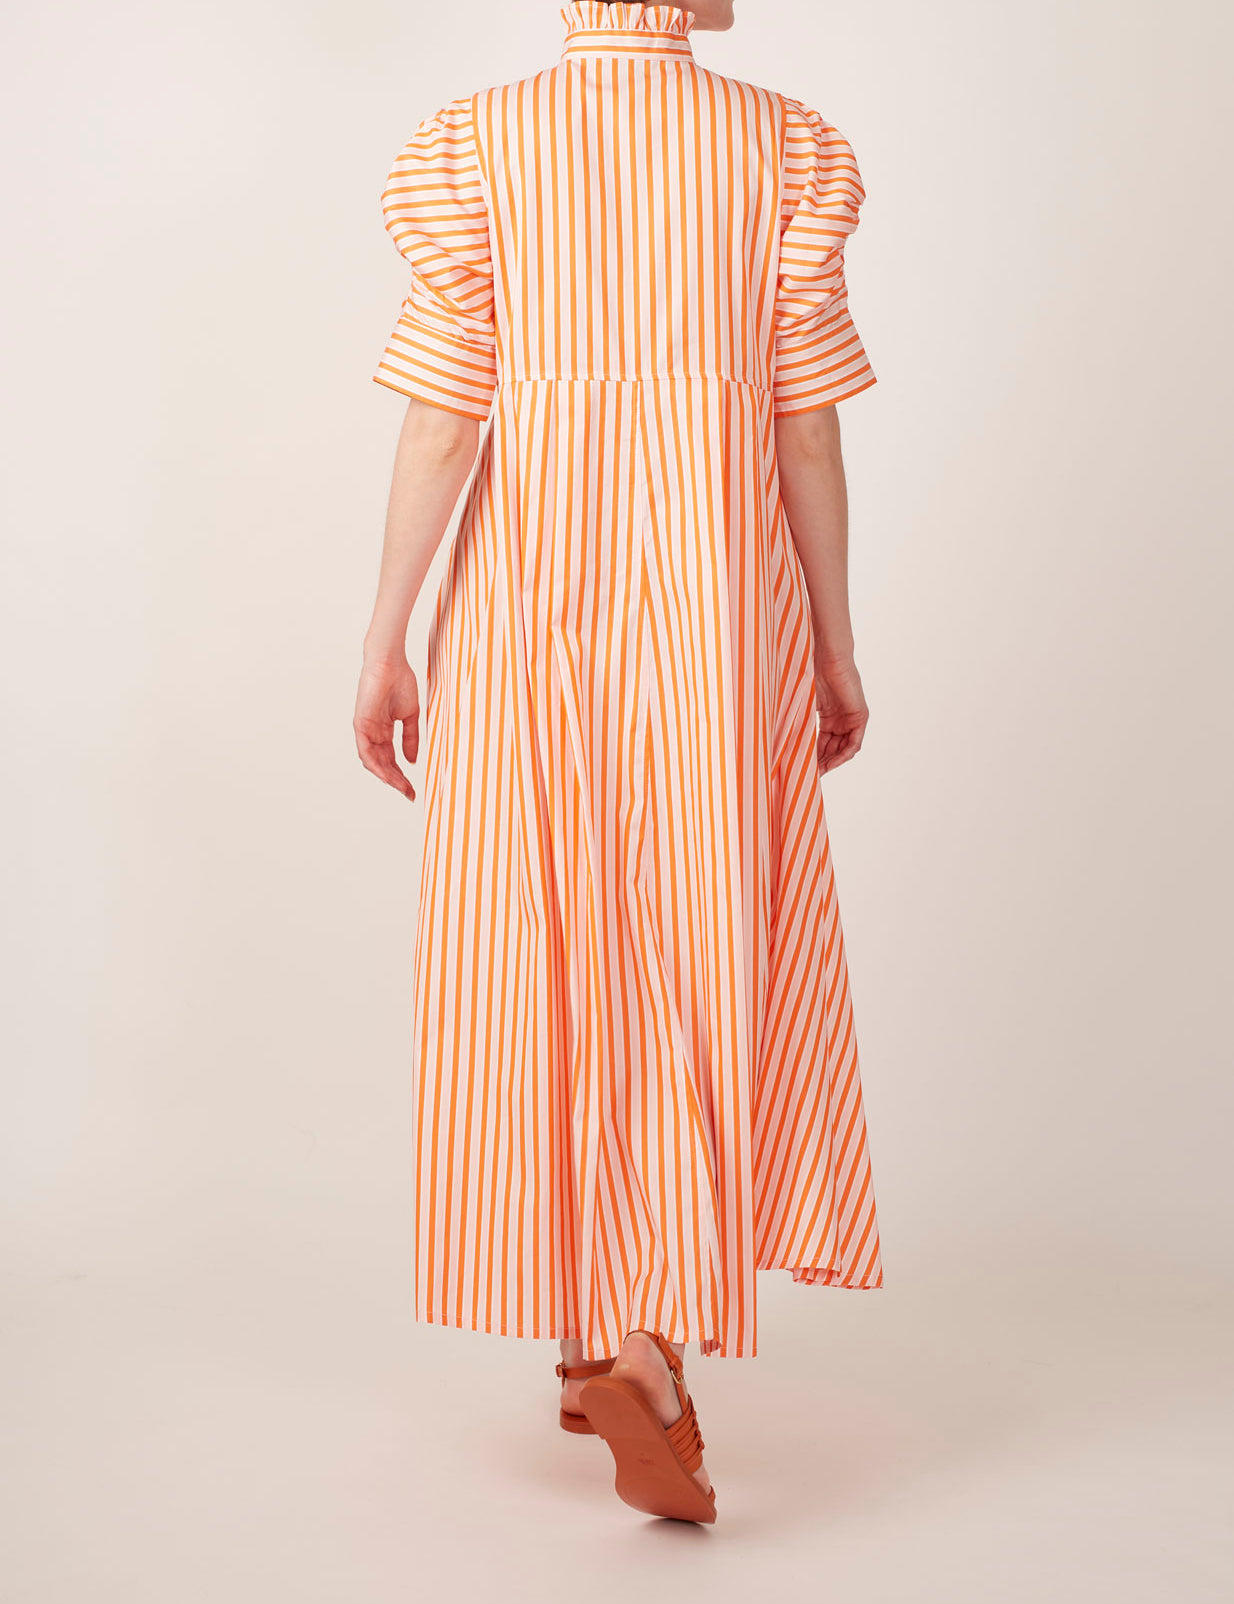 Back view of Venetia Mayfair - Orange, Salmon & White Dress by Thierry Colson